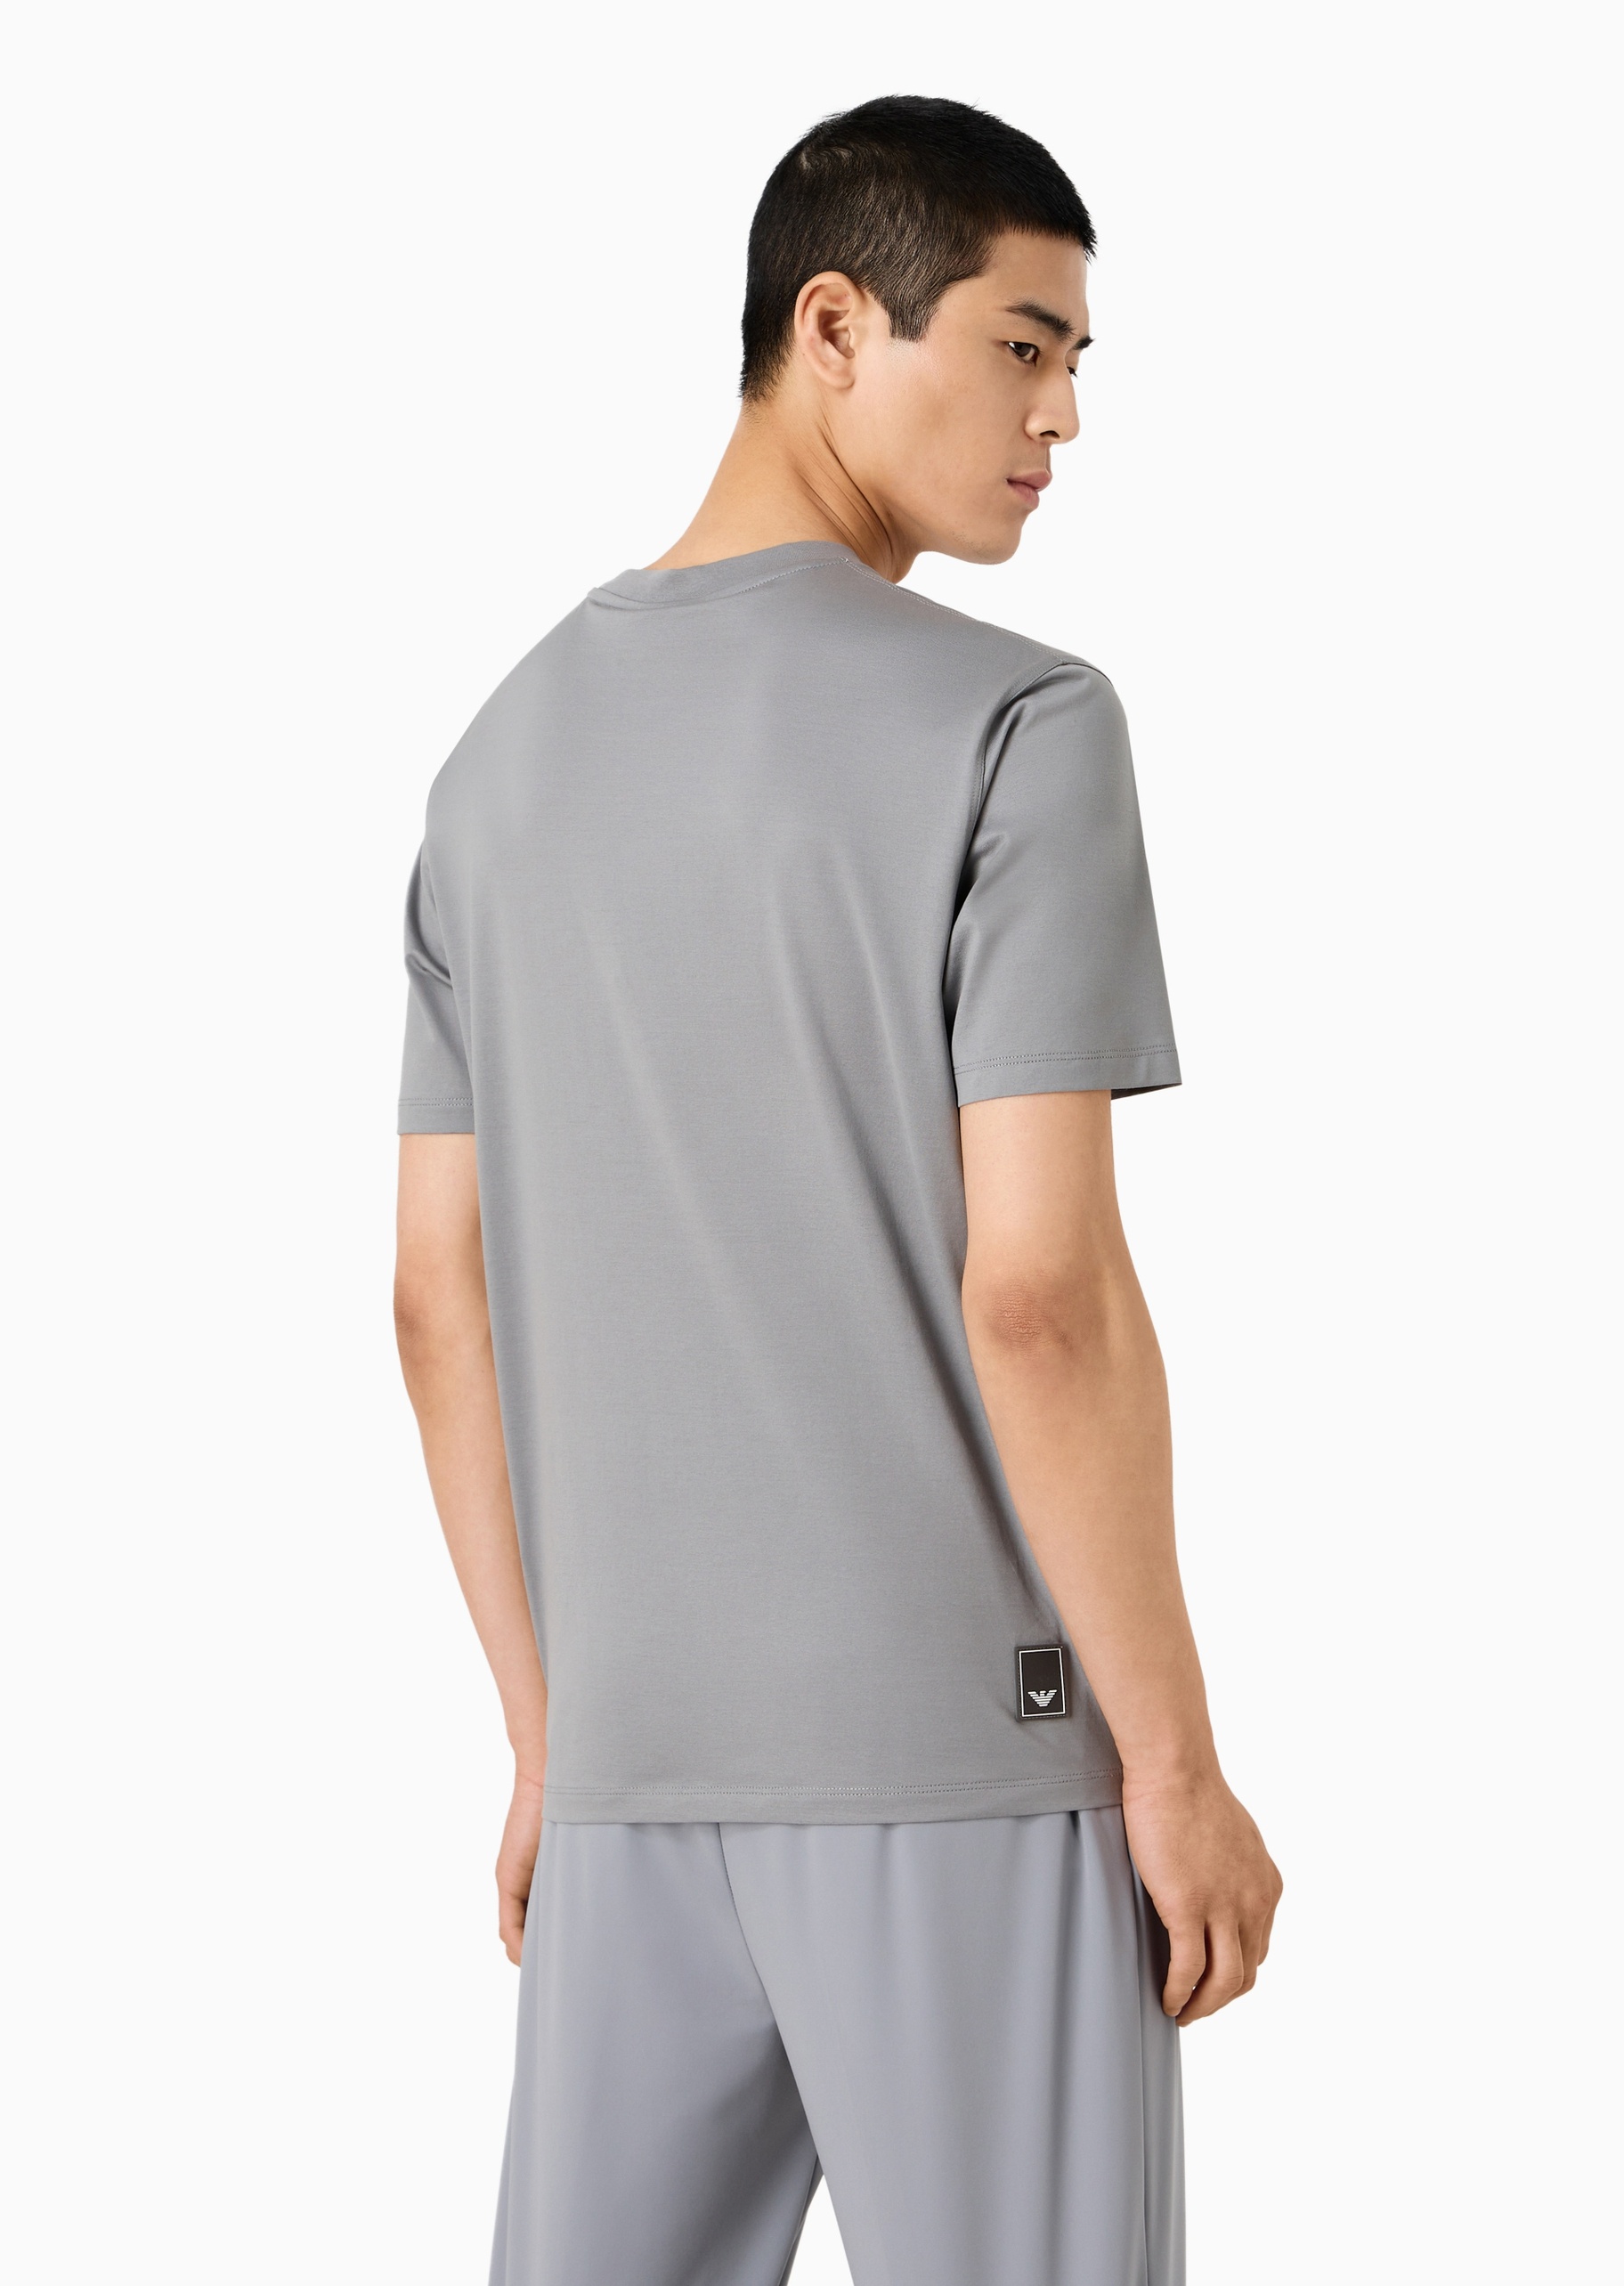 Emporio Armani 男士全棉合身短袖圆领纯色休闲T恤